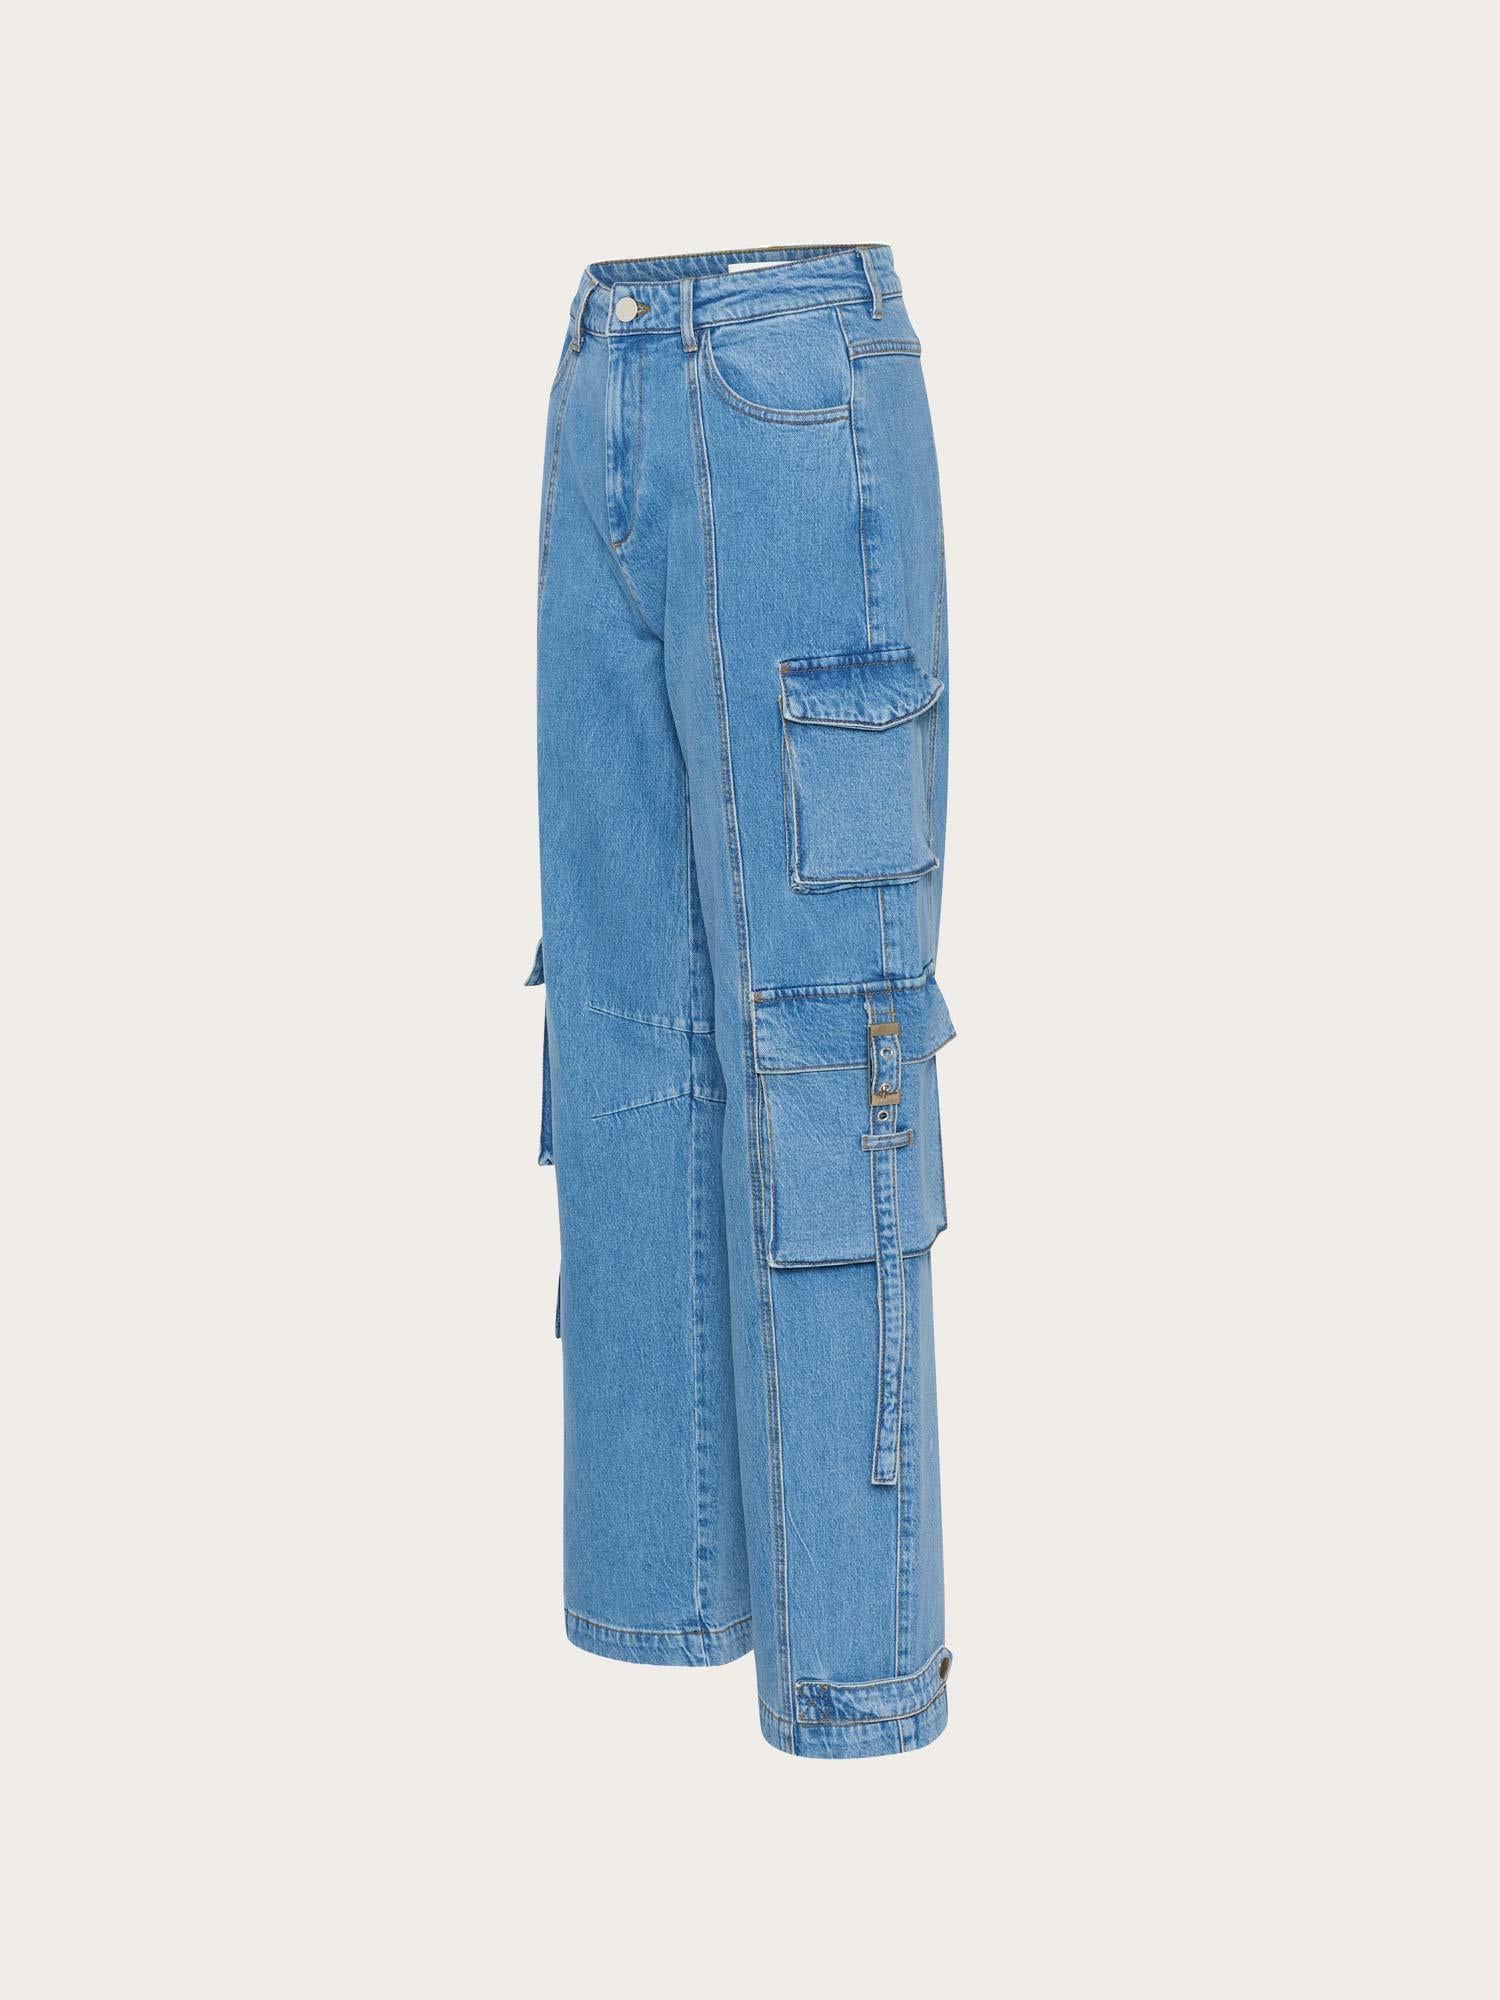 Zoy Cargo Pants - Mid Blue Washed